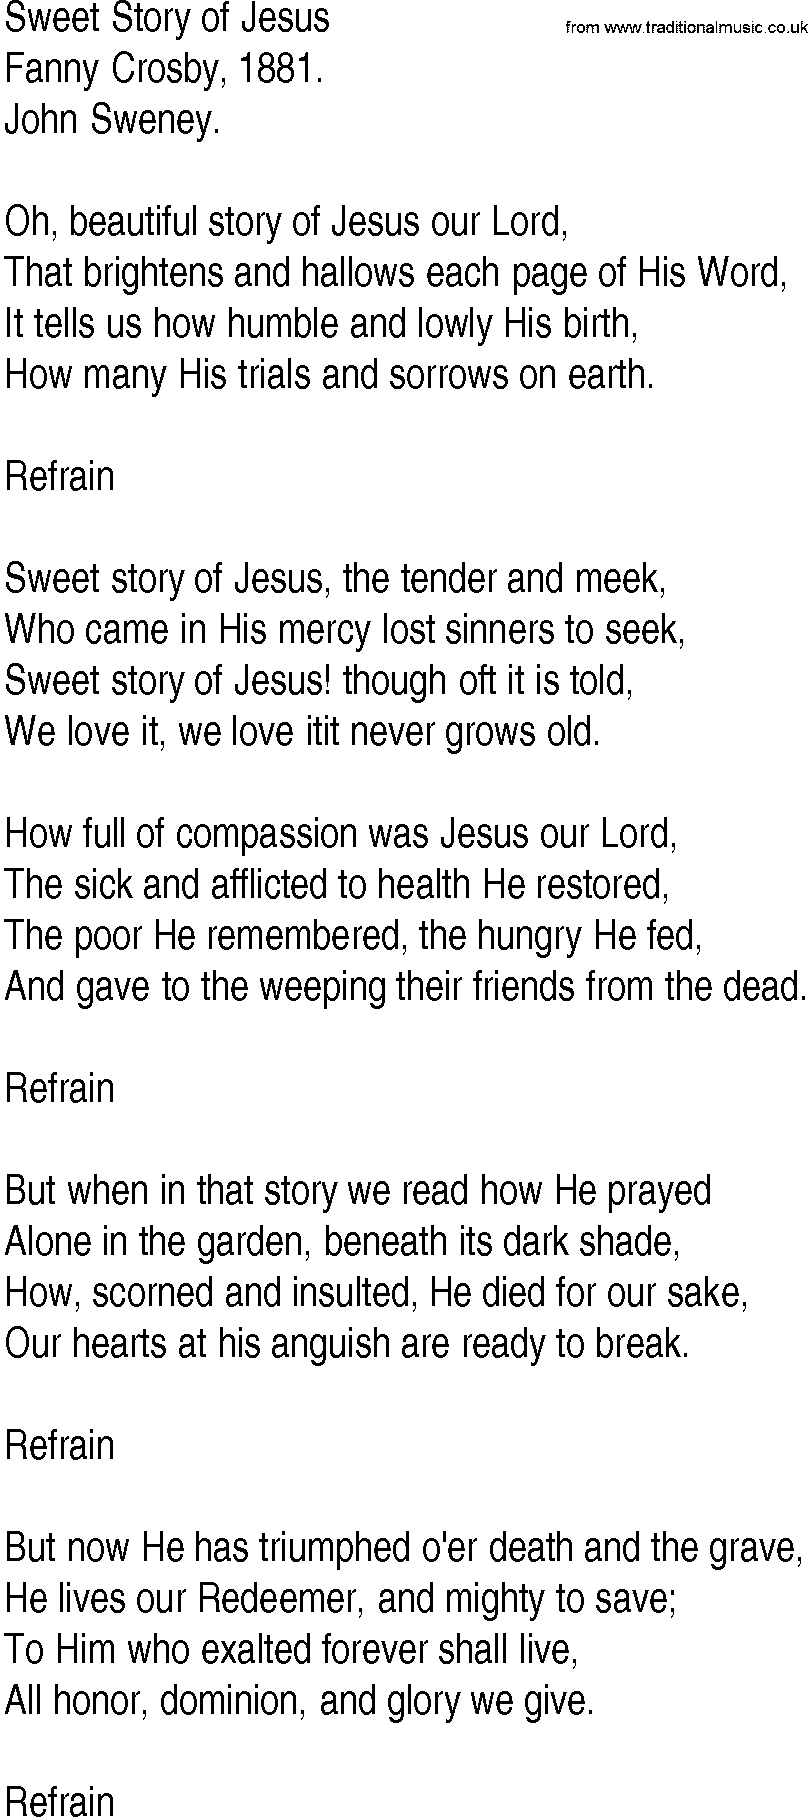 Hymn and Gospel Song: Sweet Story of Jesus by Fanny Crosby lyrics